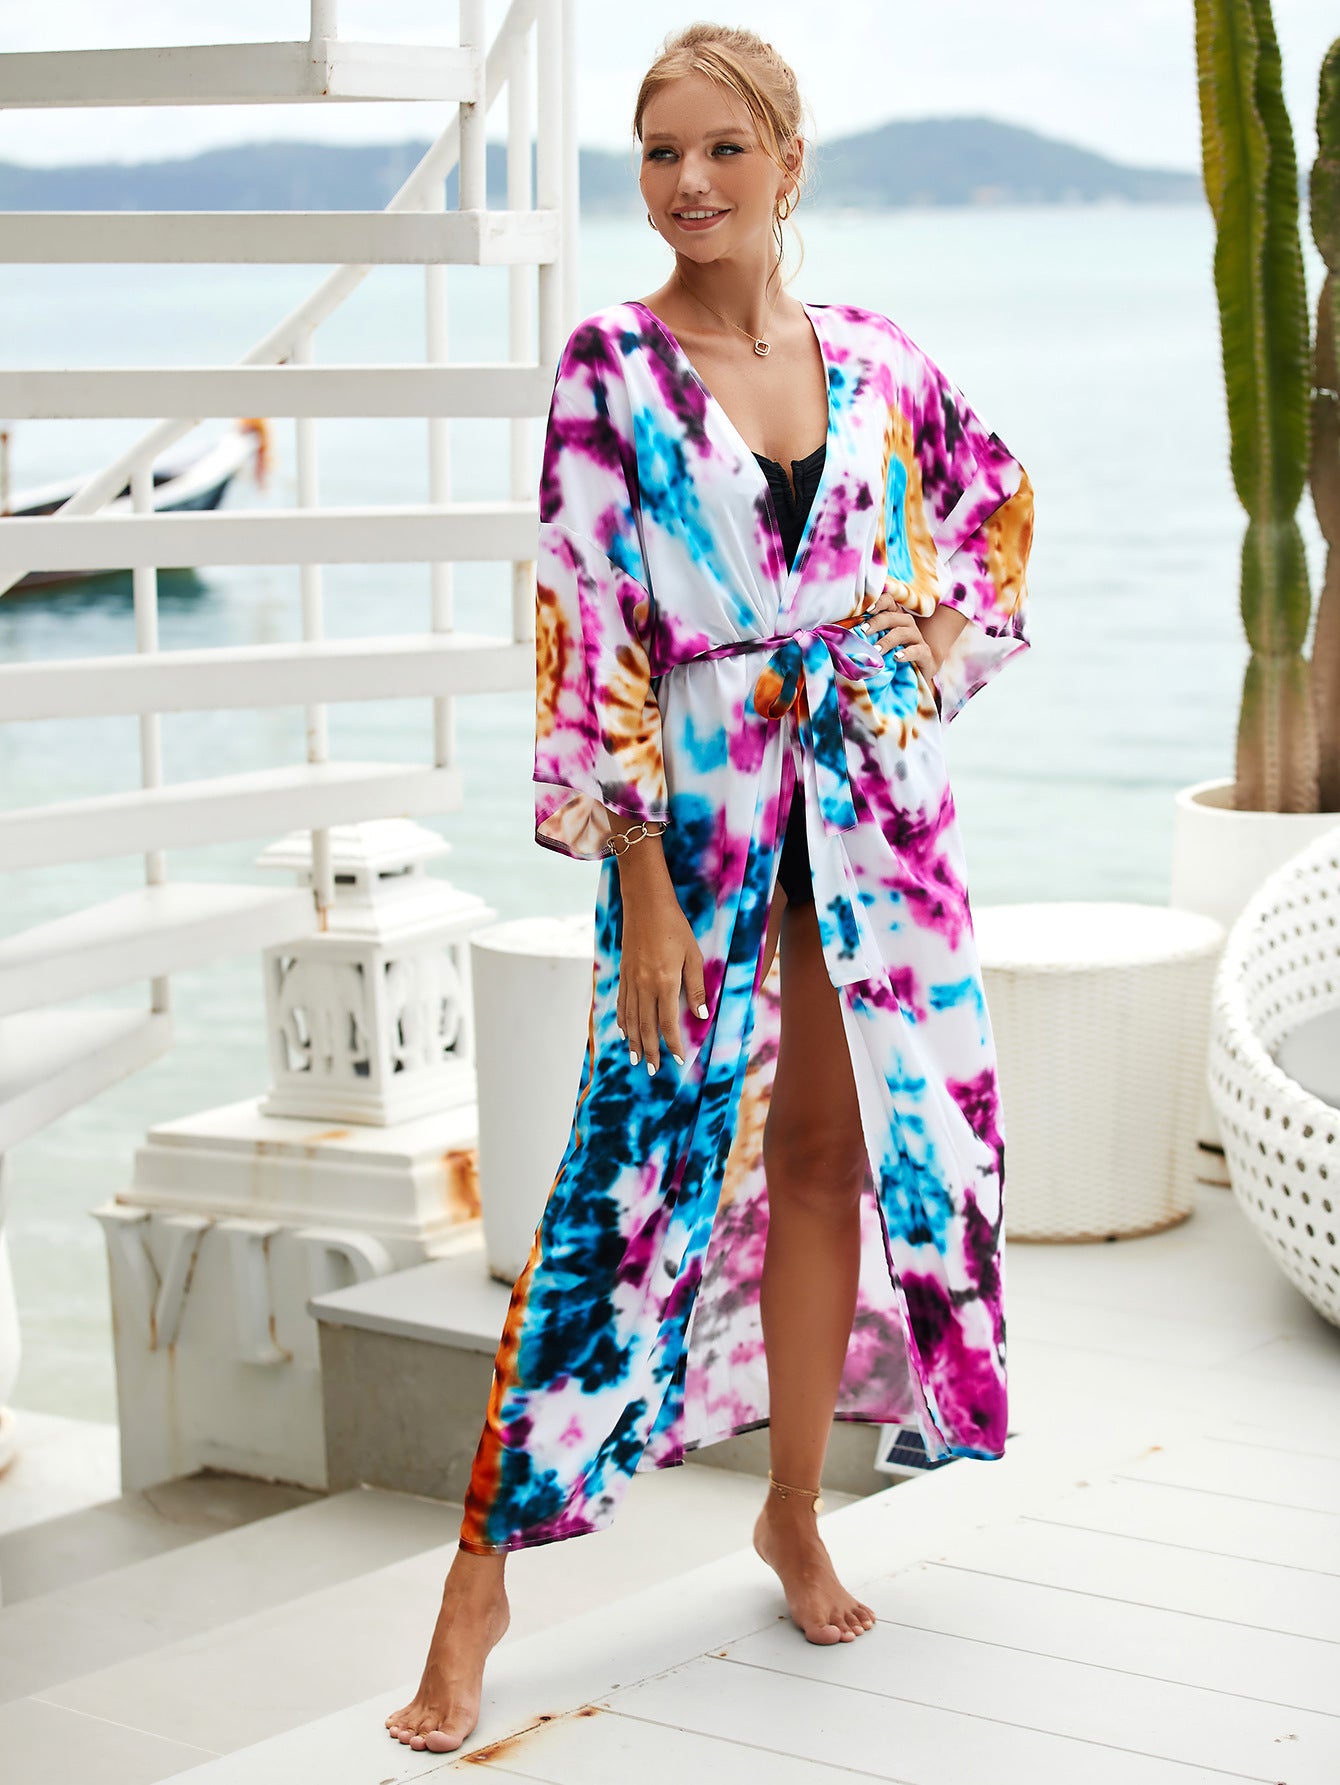 Boho Print Plus Size Batwing Sleeve Belt Kimono Dress Bathing Suit Cover Up Summer  Women Beachwear Cover-ups Sarong Q1512-1120-6